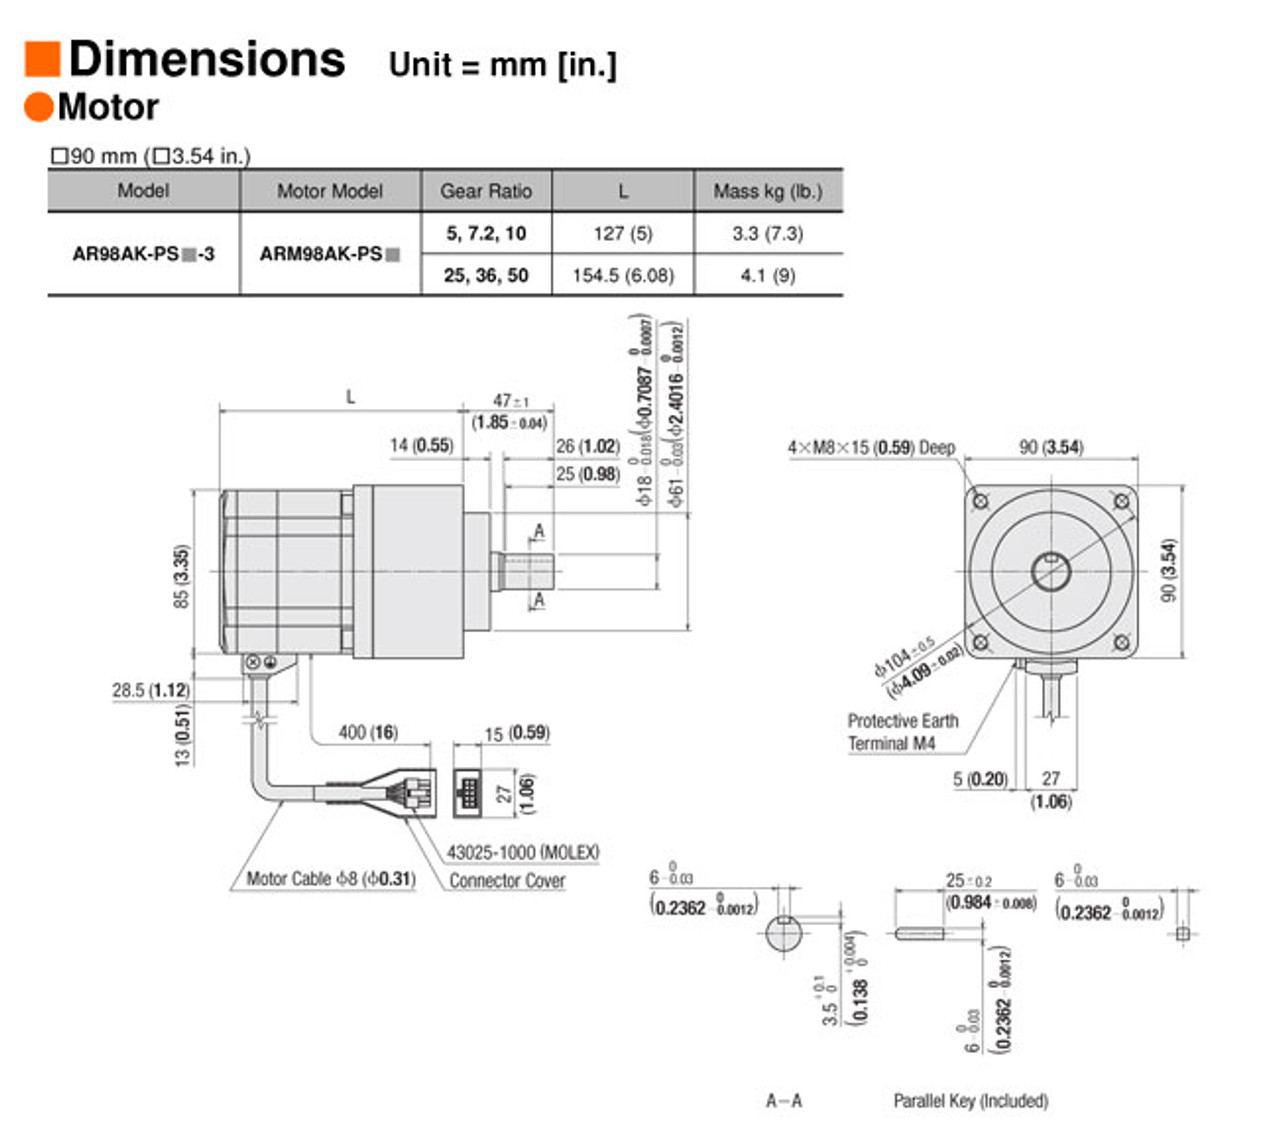 AR98AK-PS36-3 - Dimensions